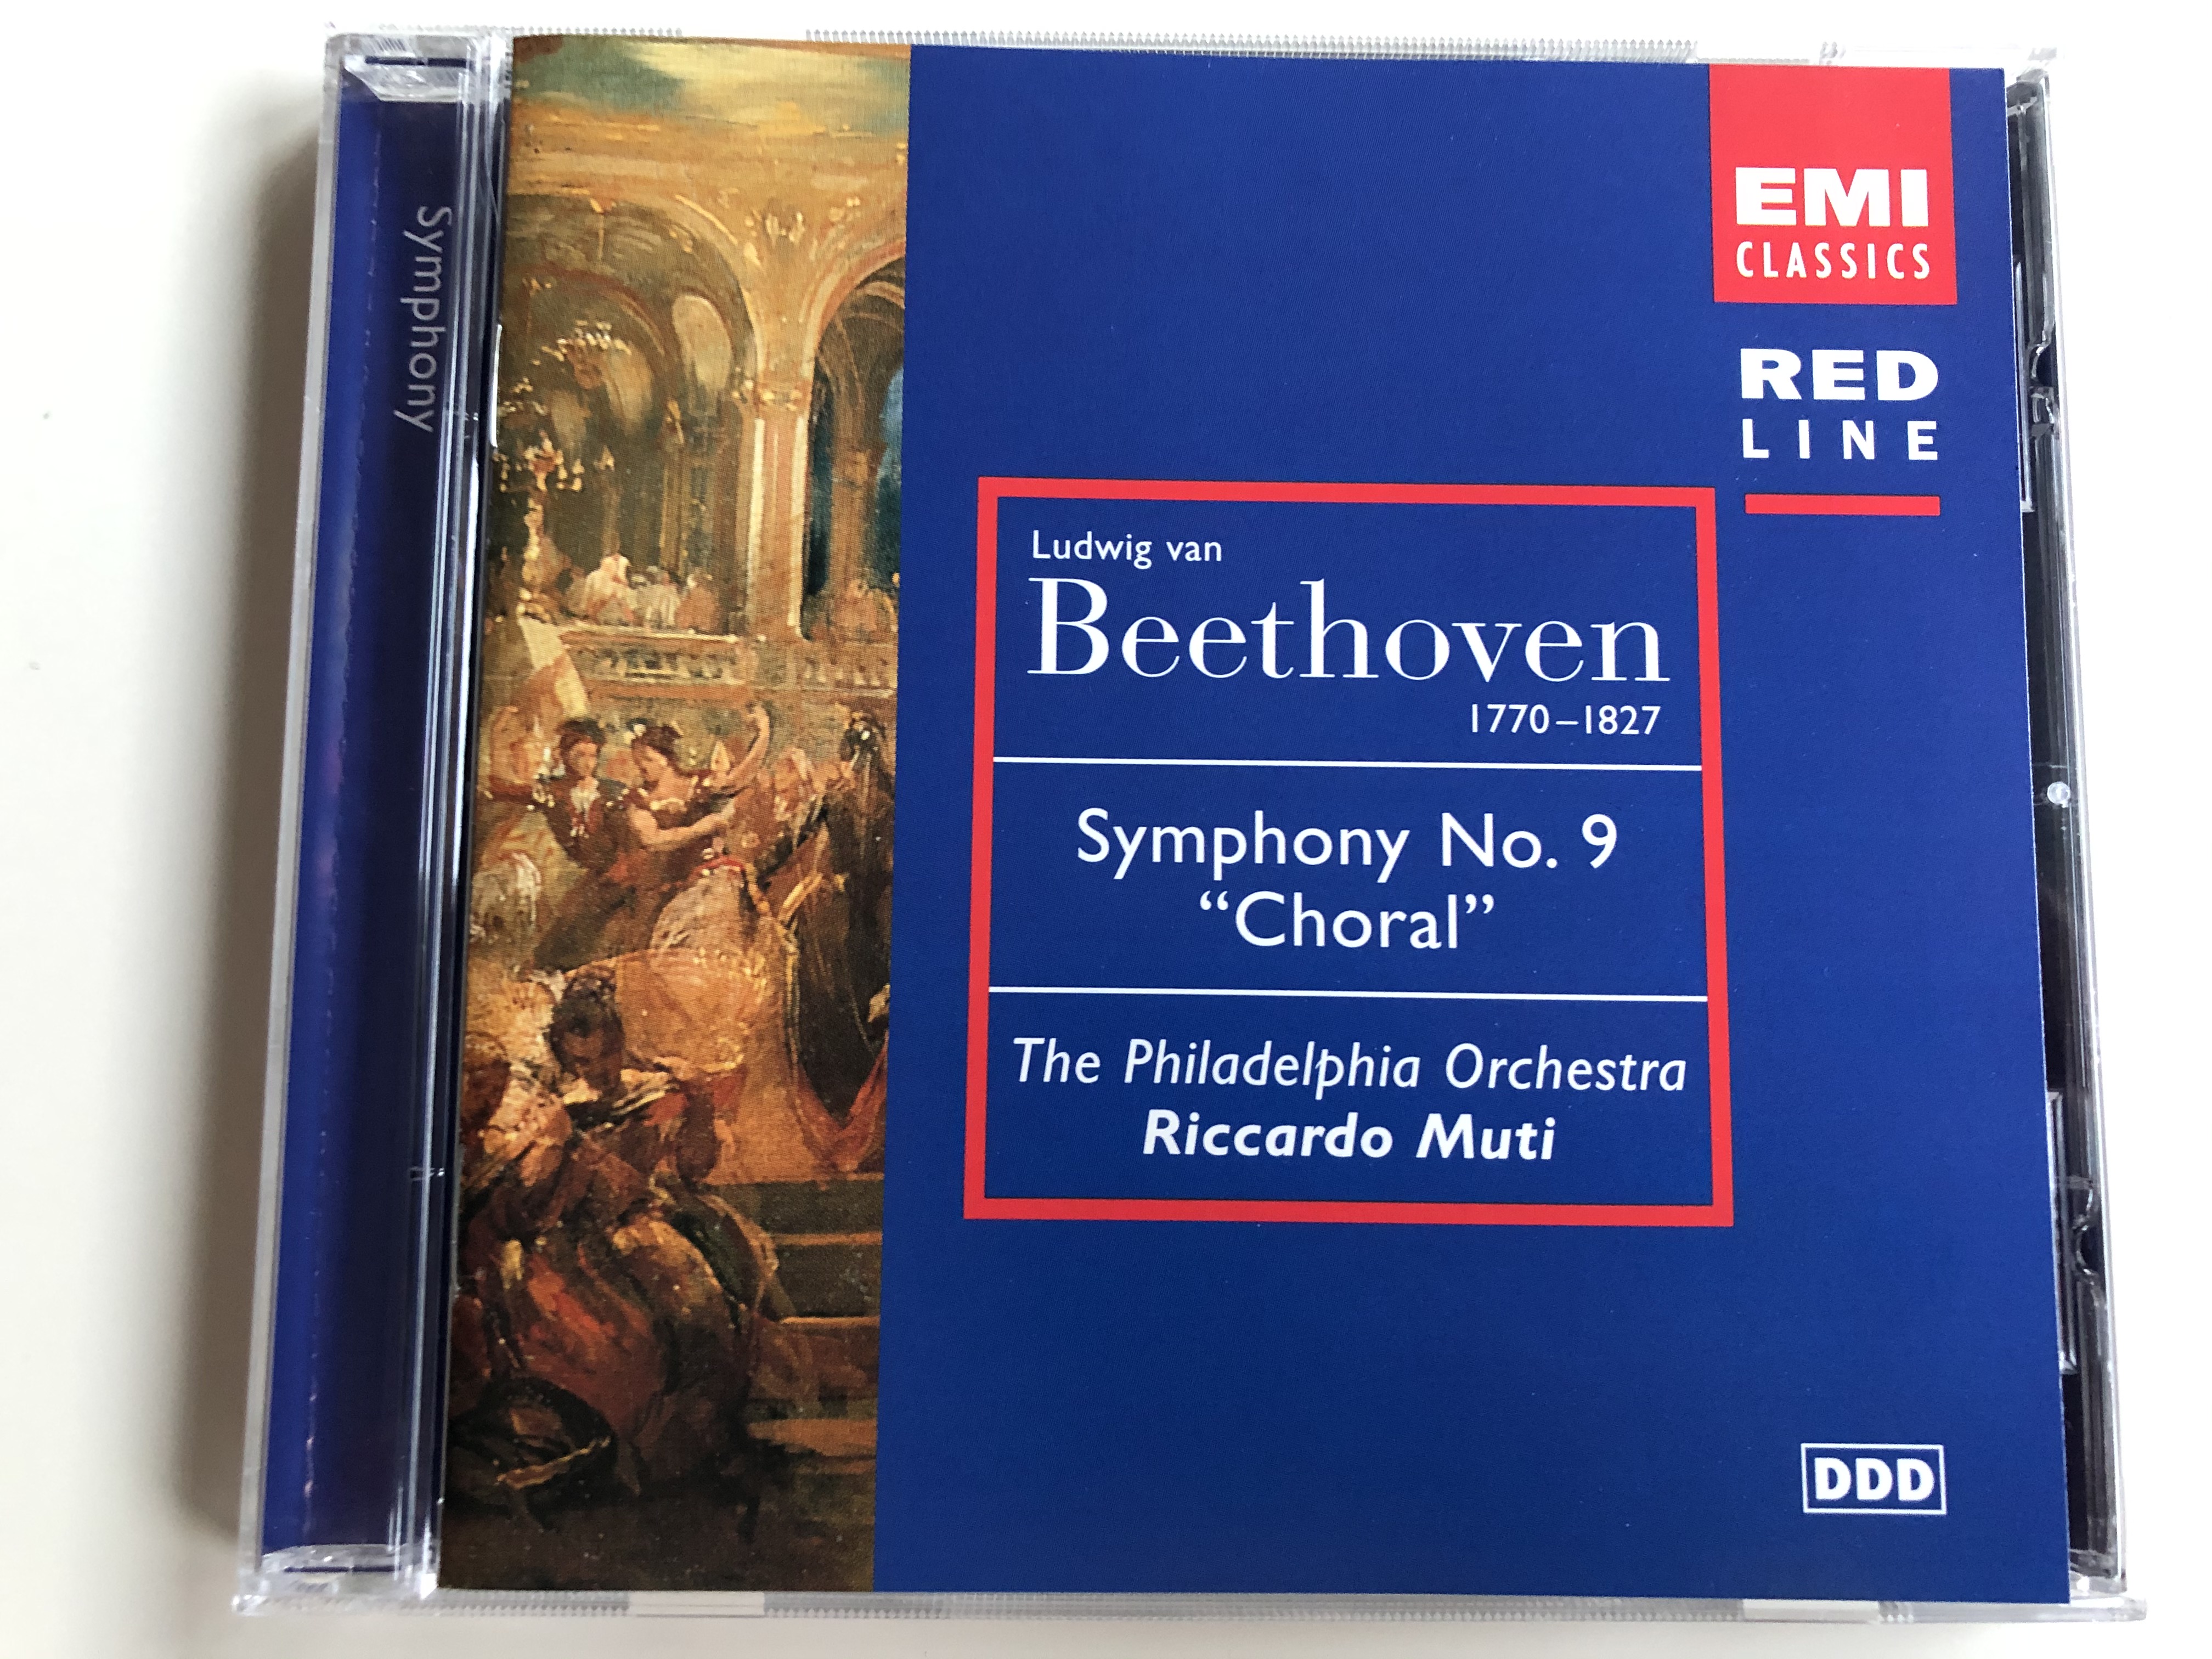 ludwig-van-beethoven-1770-1827-symphony-no.-9-choral-the-philadelphia-orchestra-riccardo-muti-emi-classics-audio-cd-1998-stereo-724357255820-1-.jpg